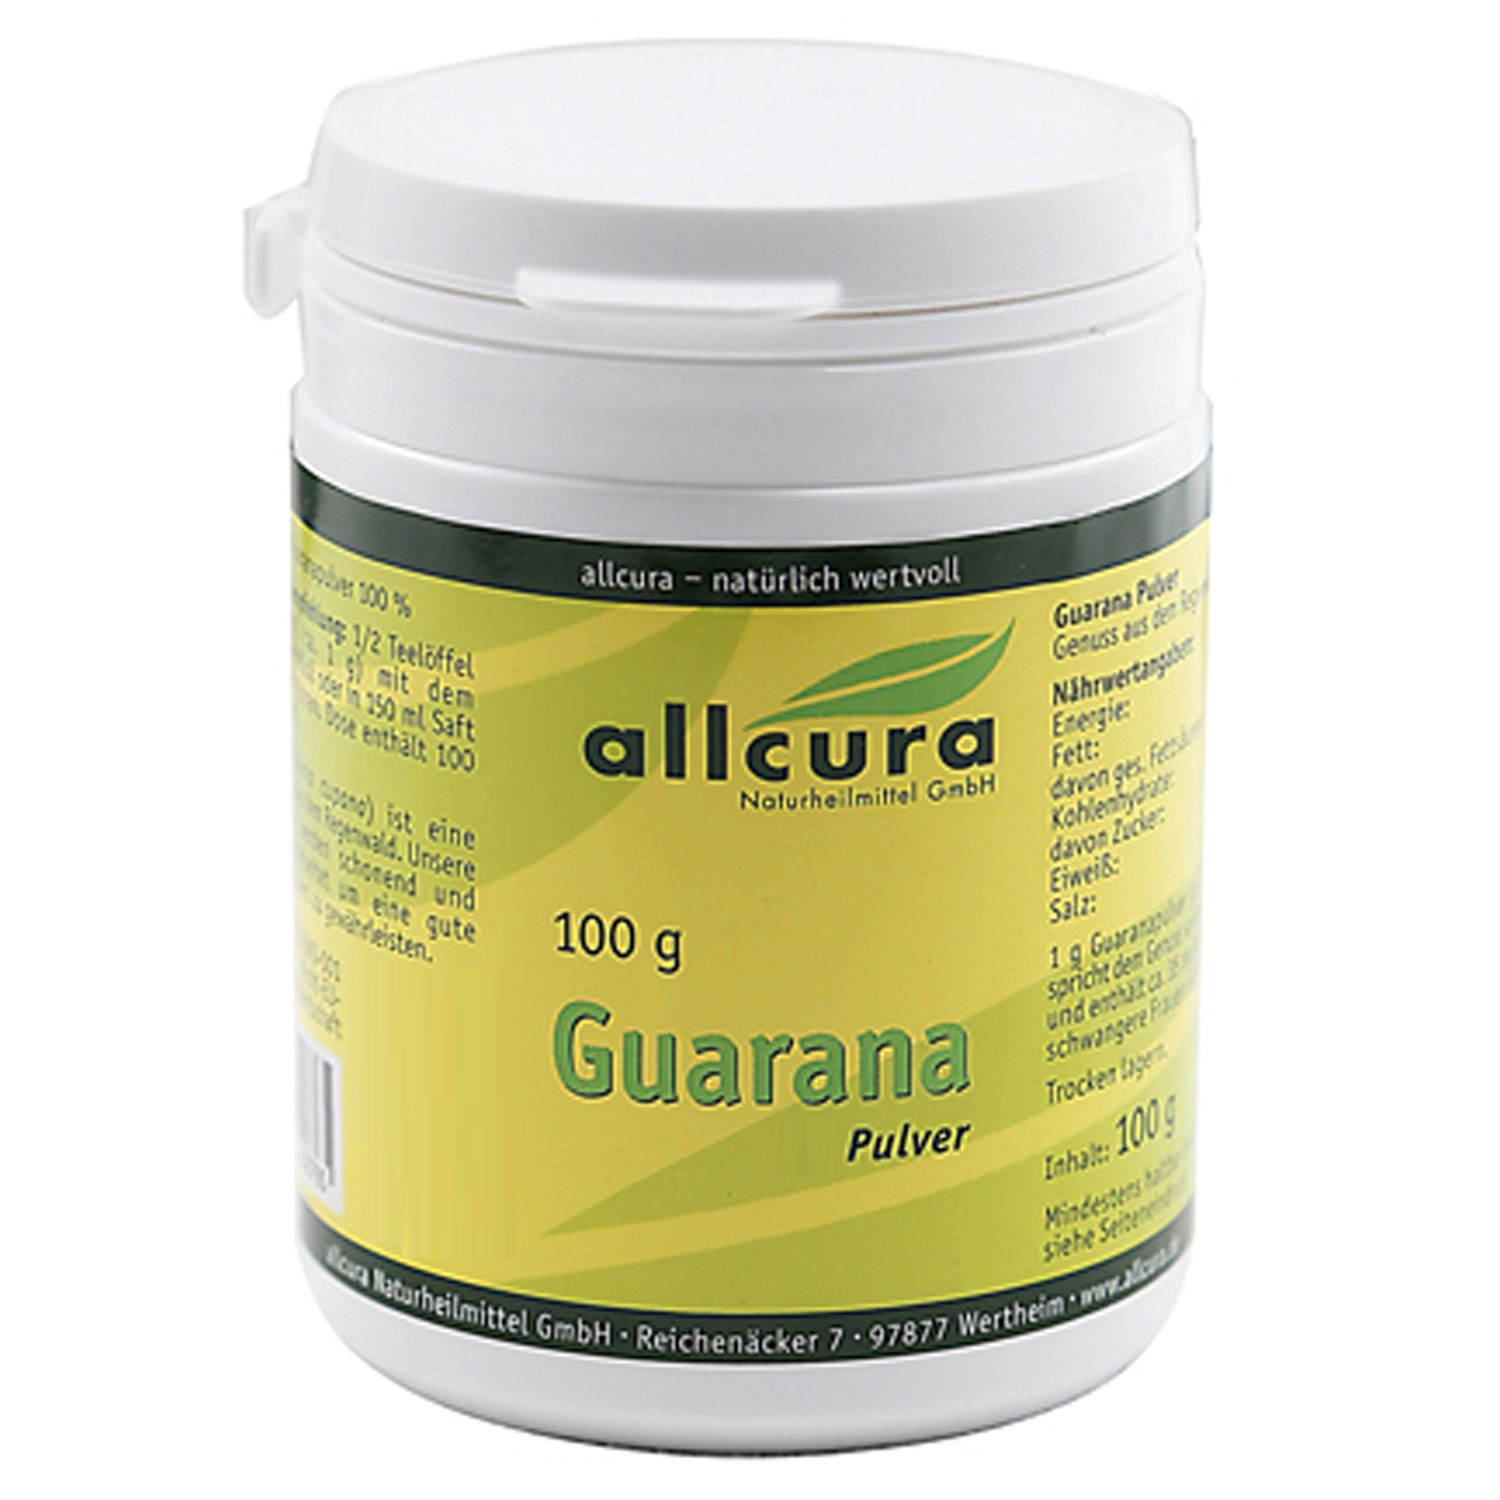 Guarana Pulver von Allcura - 100g 